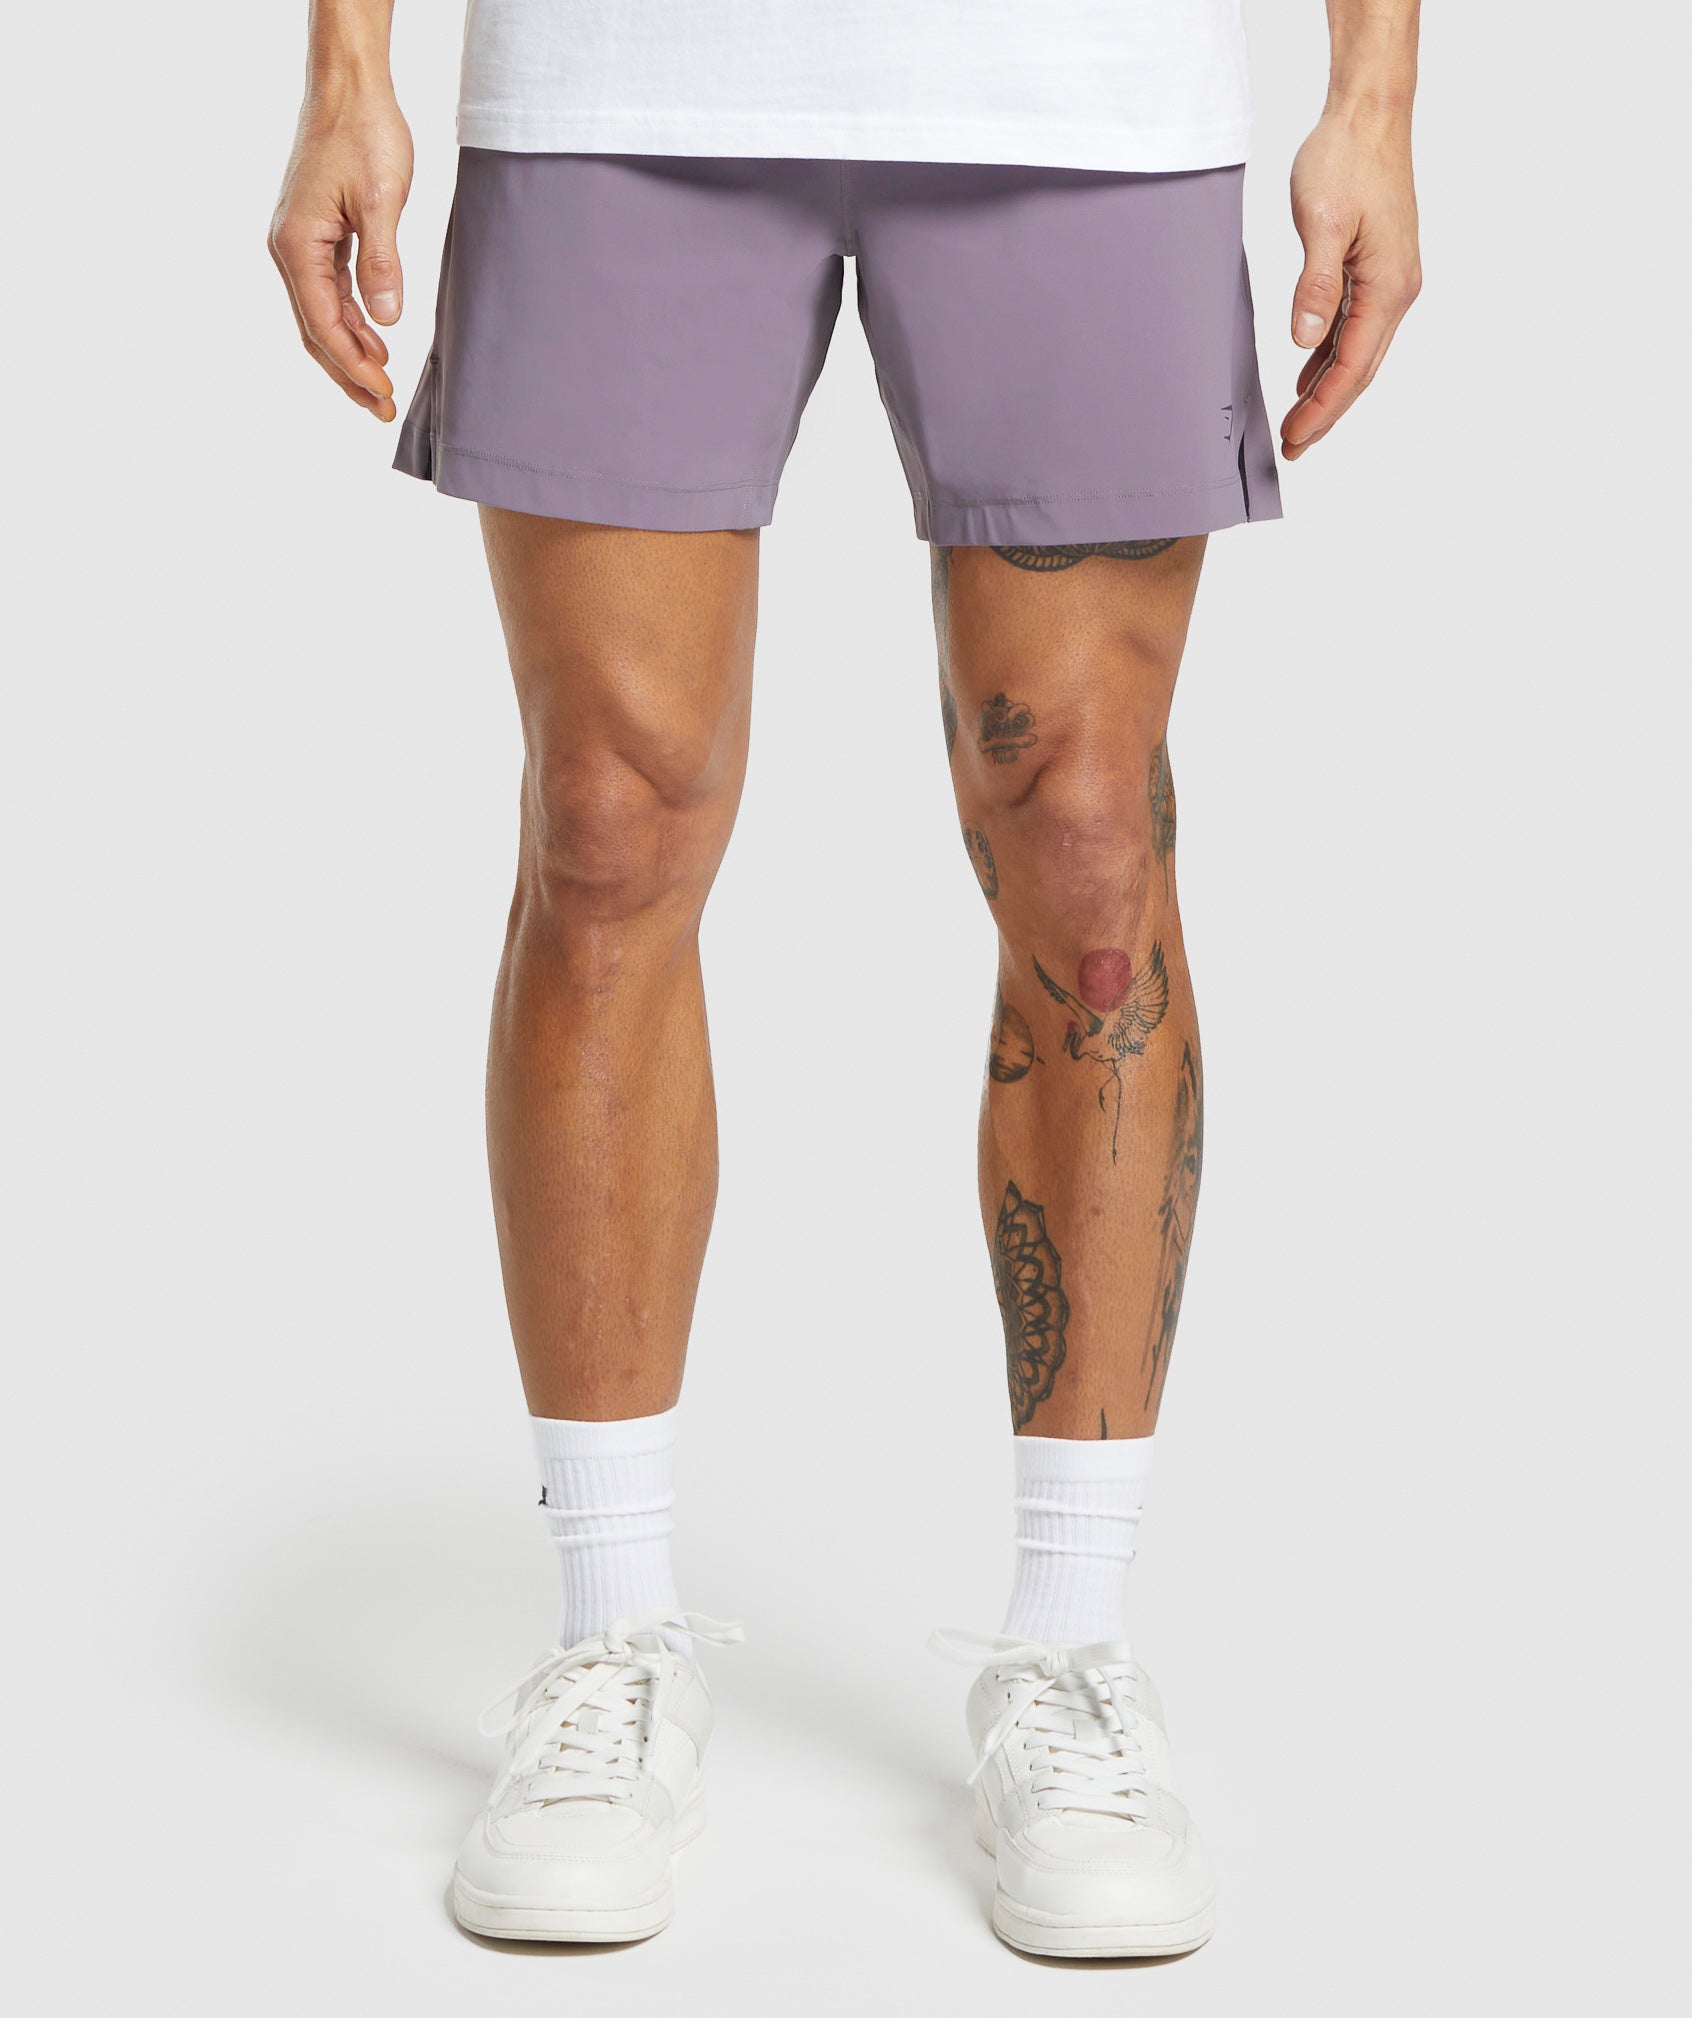 Studio 6" Shorts in Fog Purple